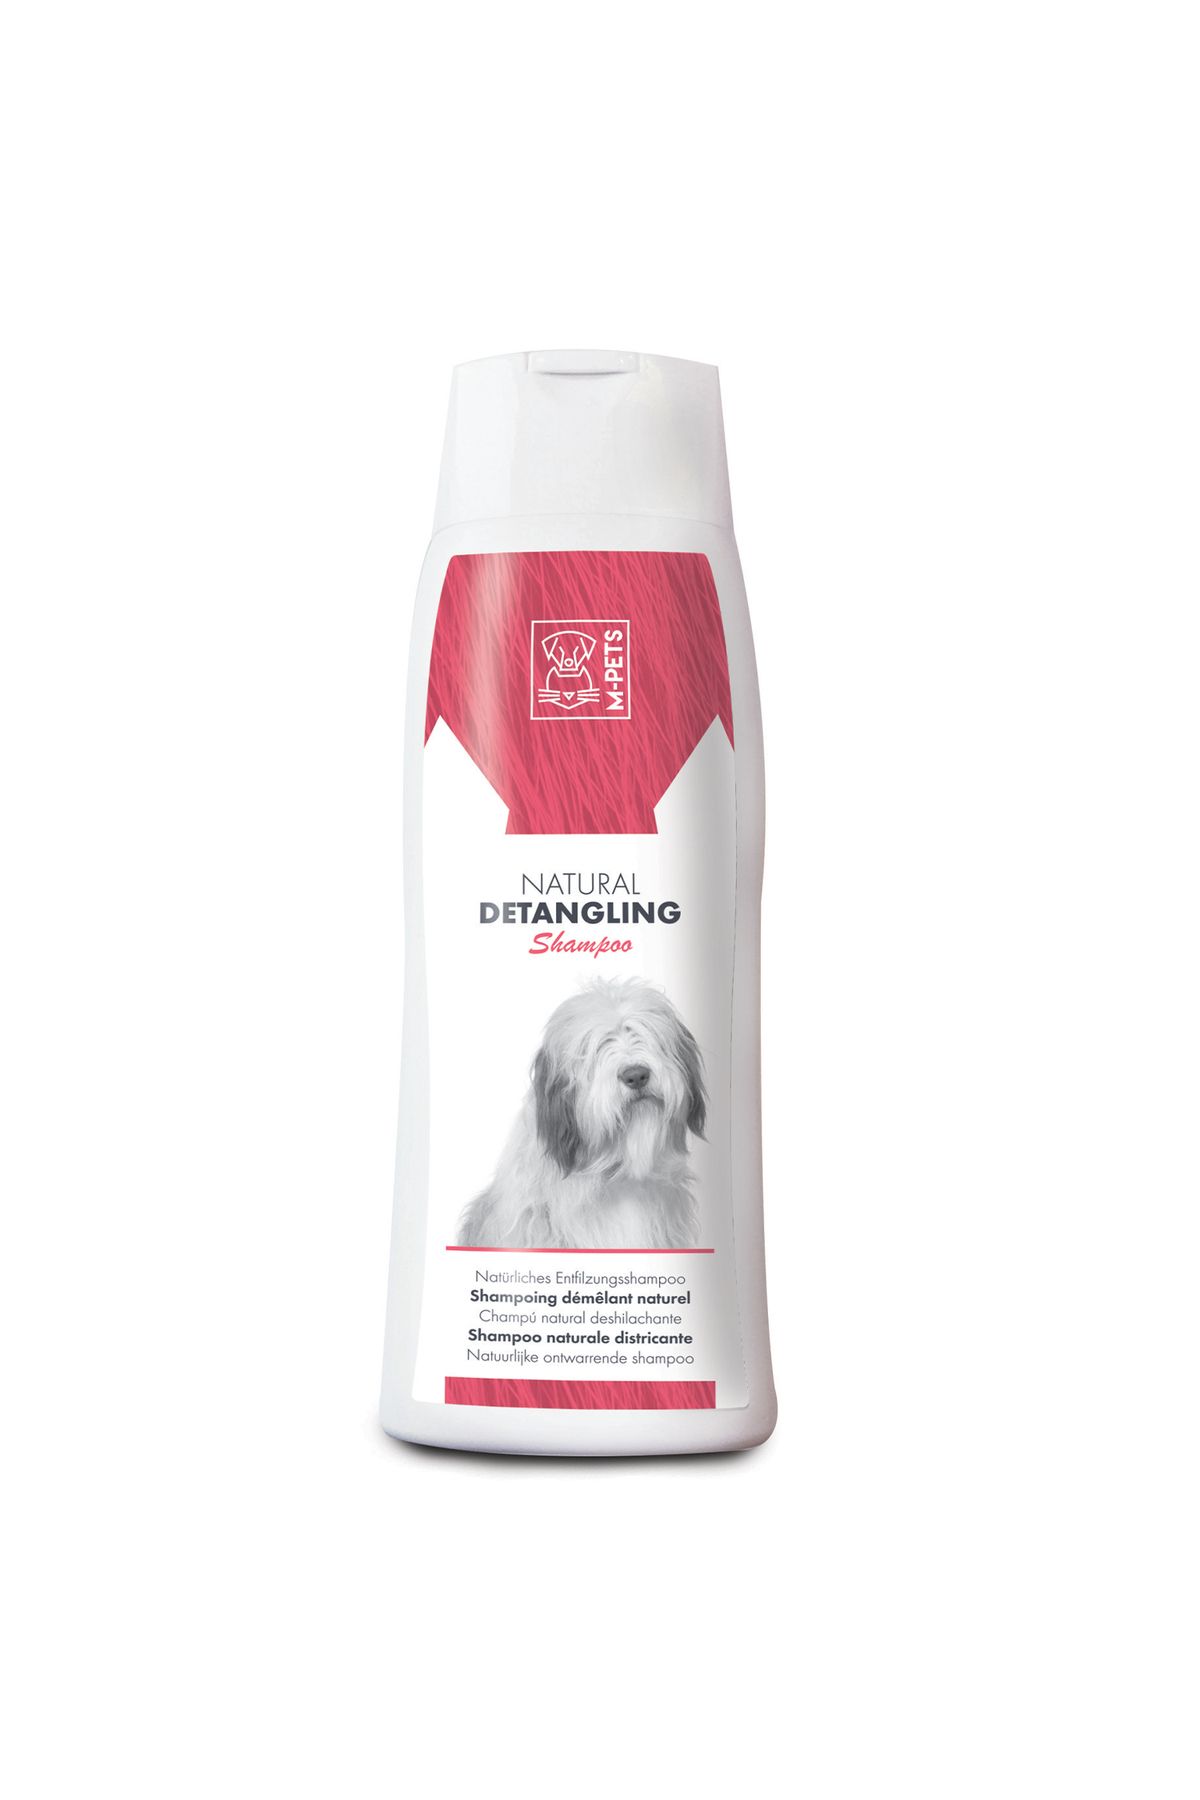 M-PETS Natural Detangling Shampoo 10101299